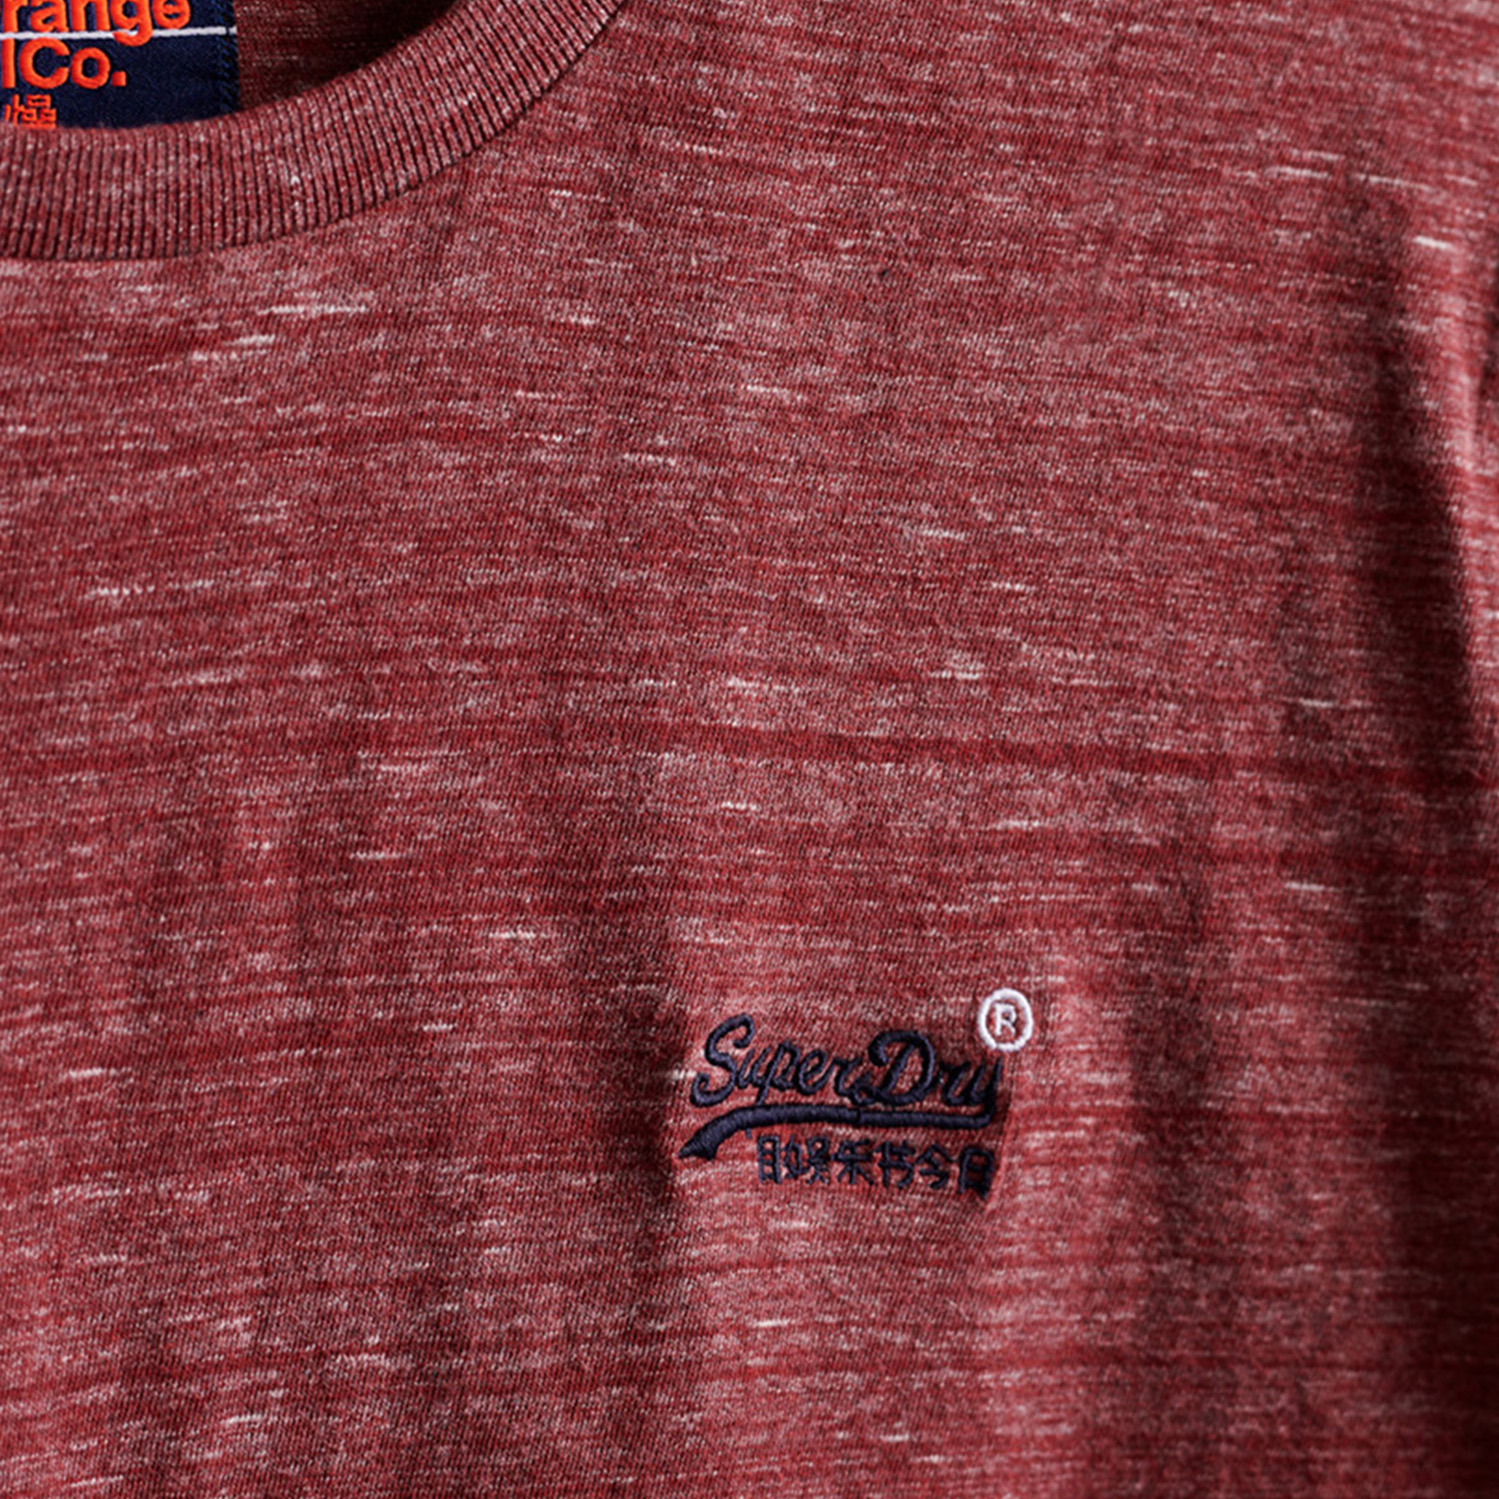 Superdry Herren Orange Label Vintage Embroidery Tee T-Shirt M10000119A rot